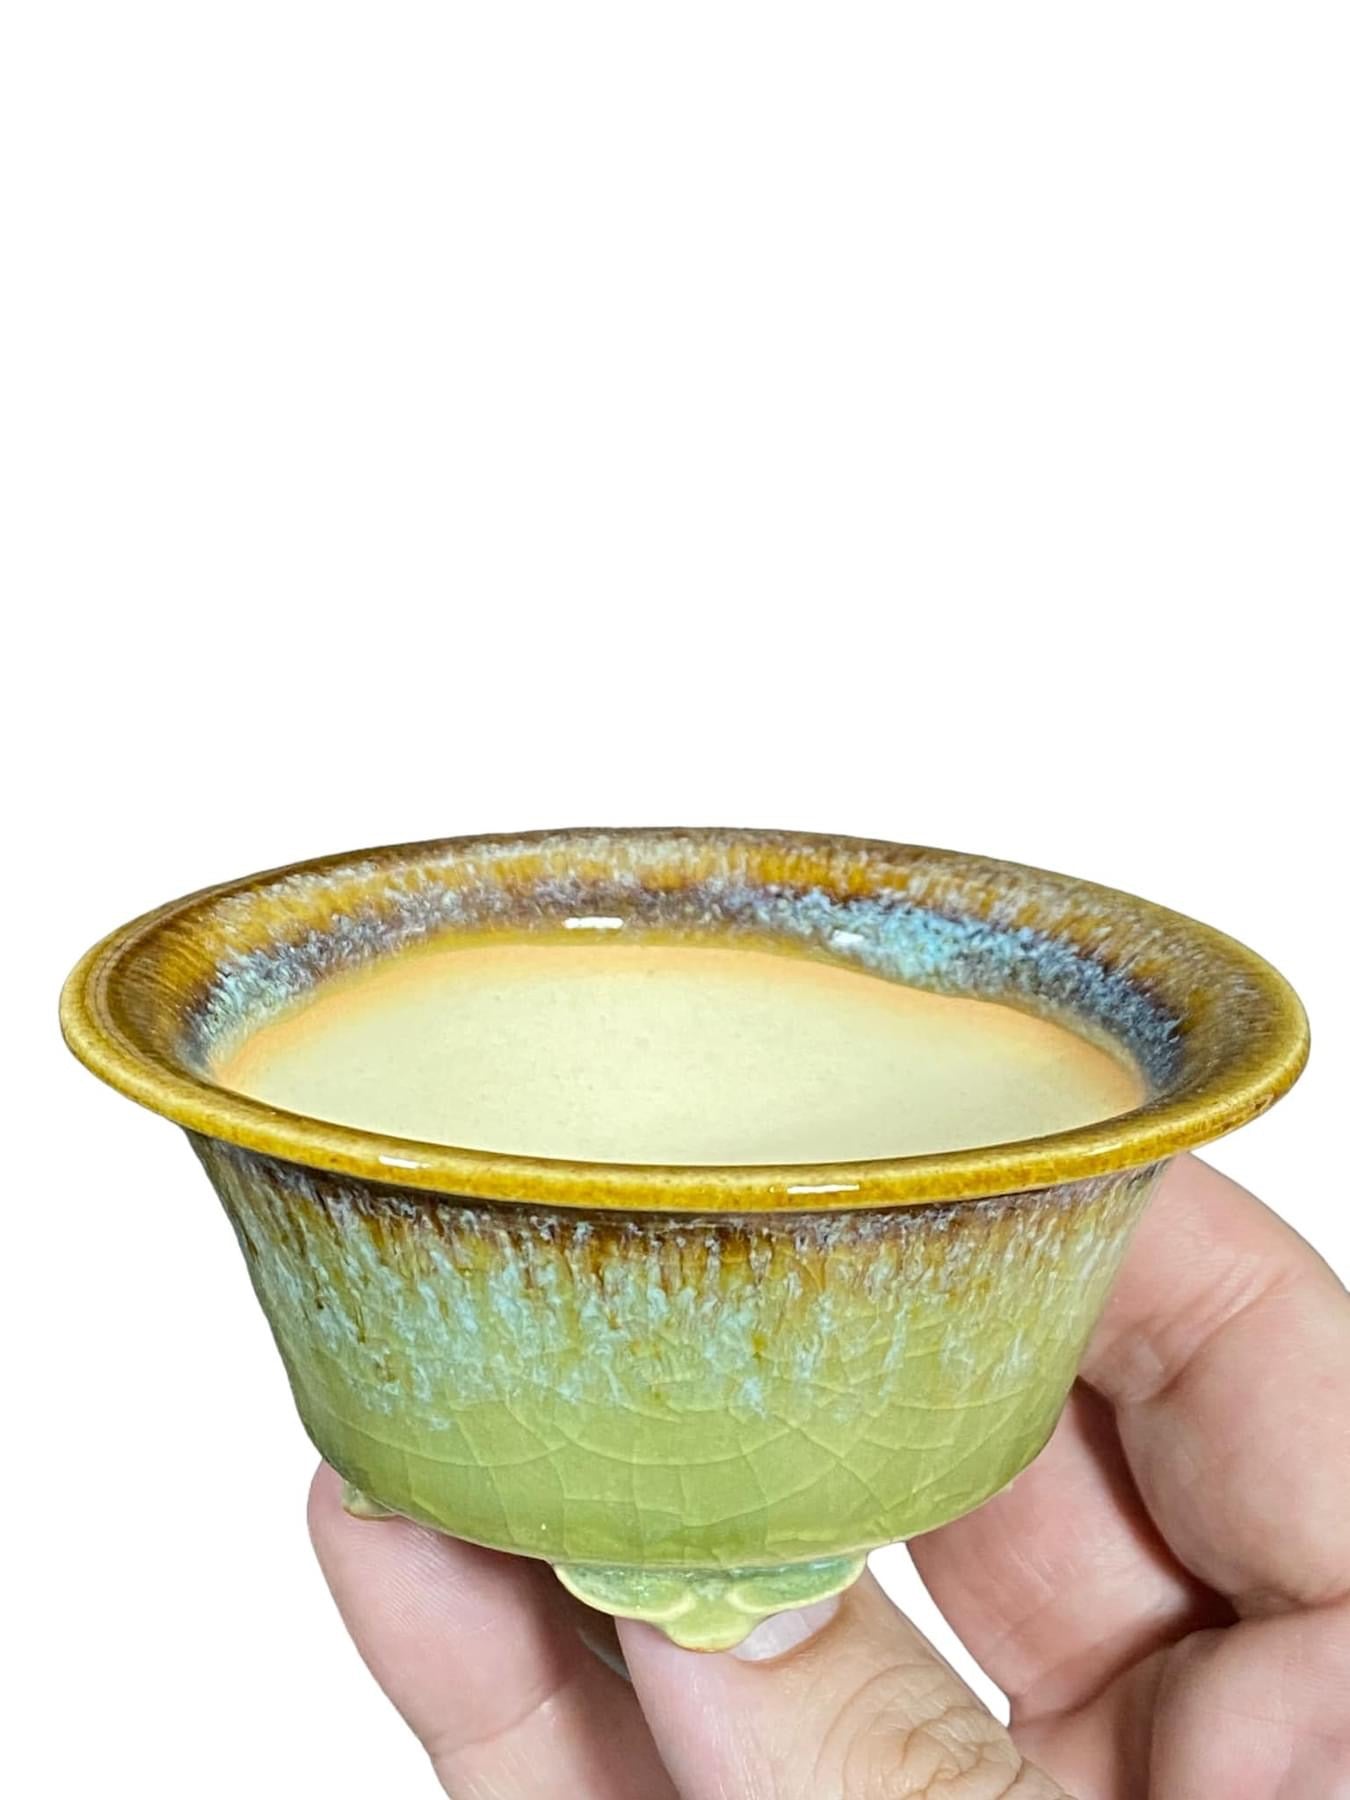 Kiyoshi Kiowai “Fuka” - Stellar Glazed Bonsai Pot (3-13/16” wide)